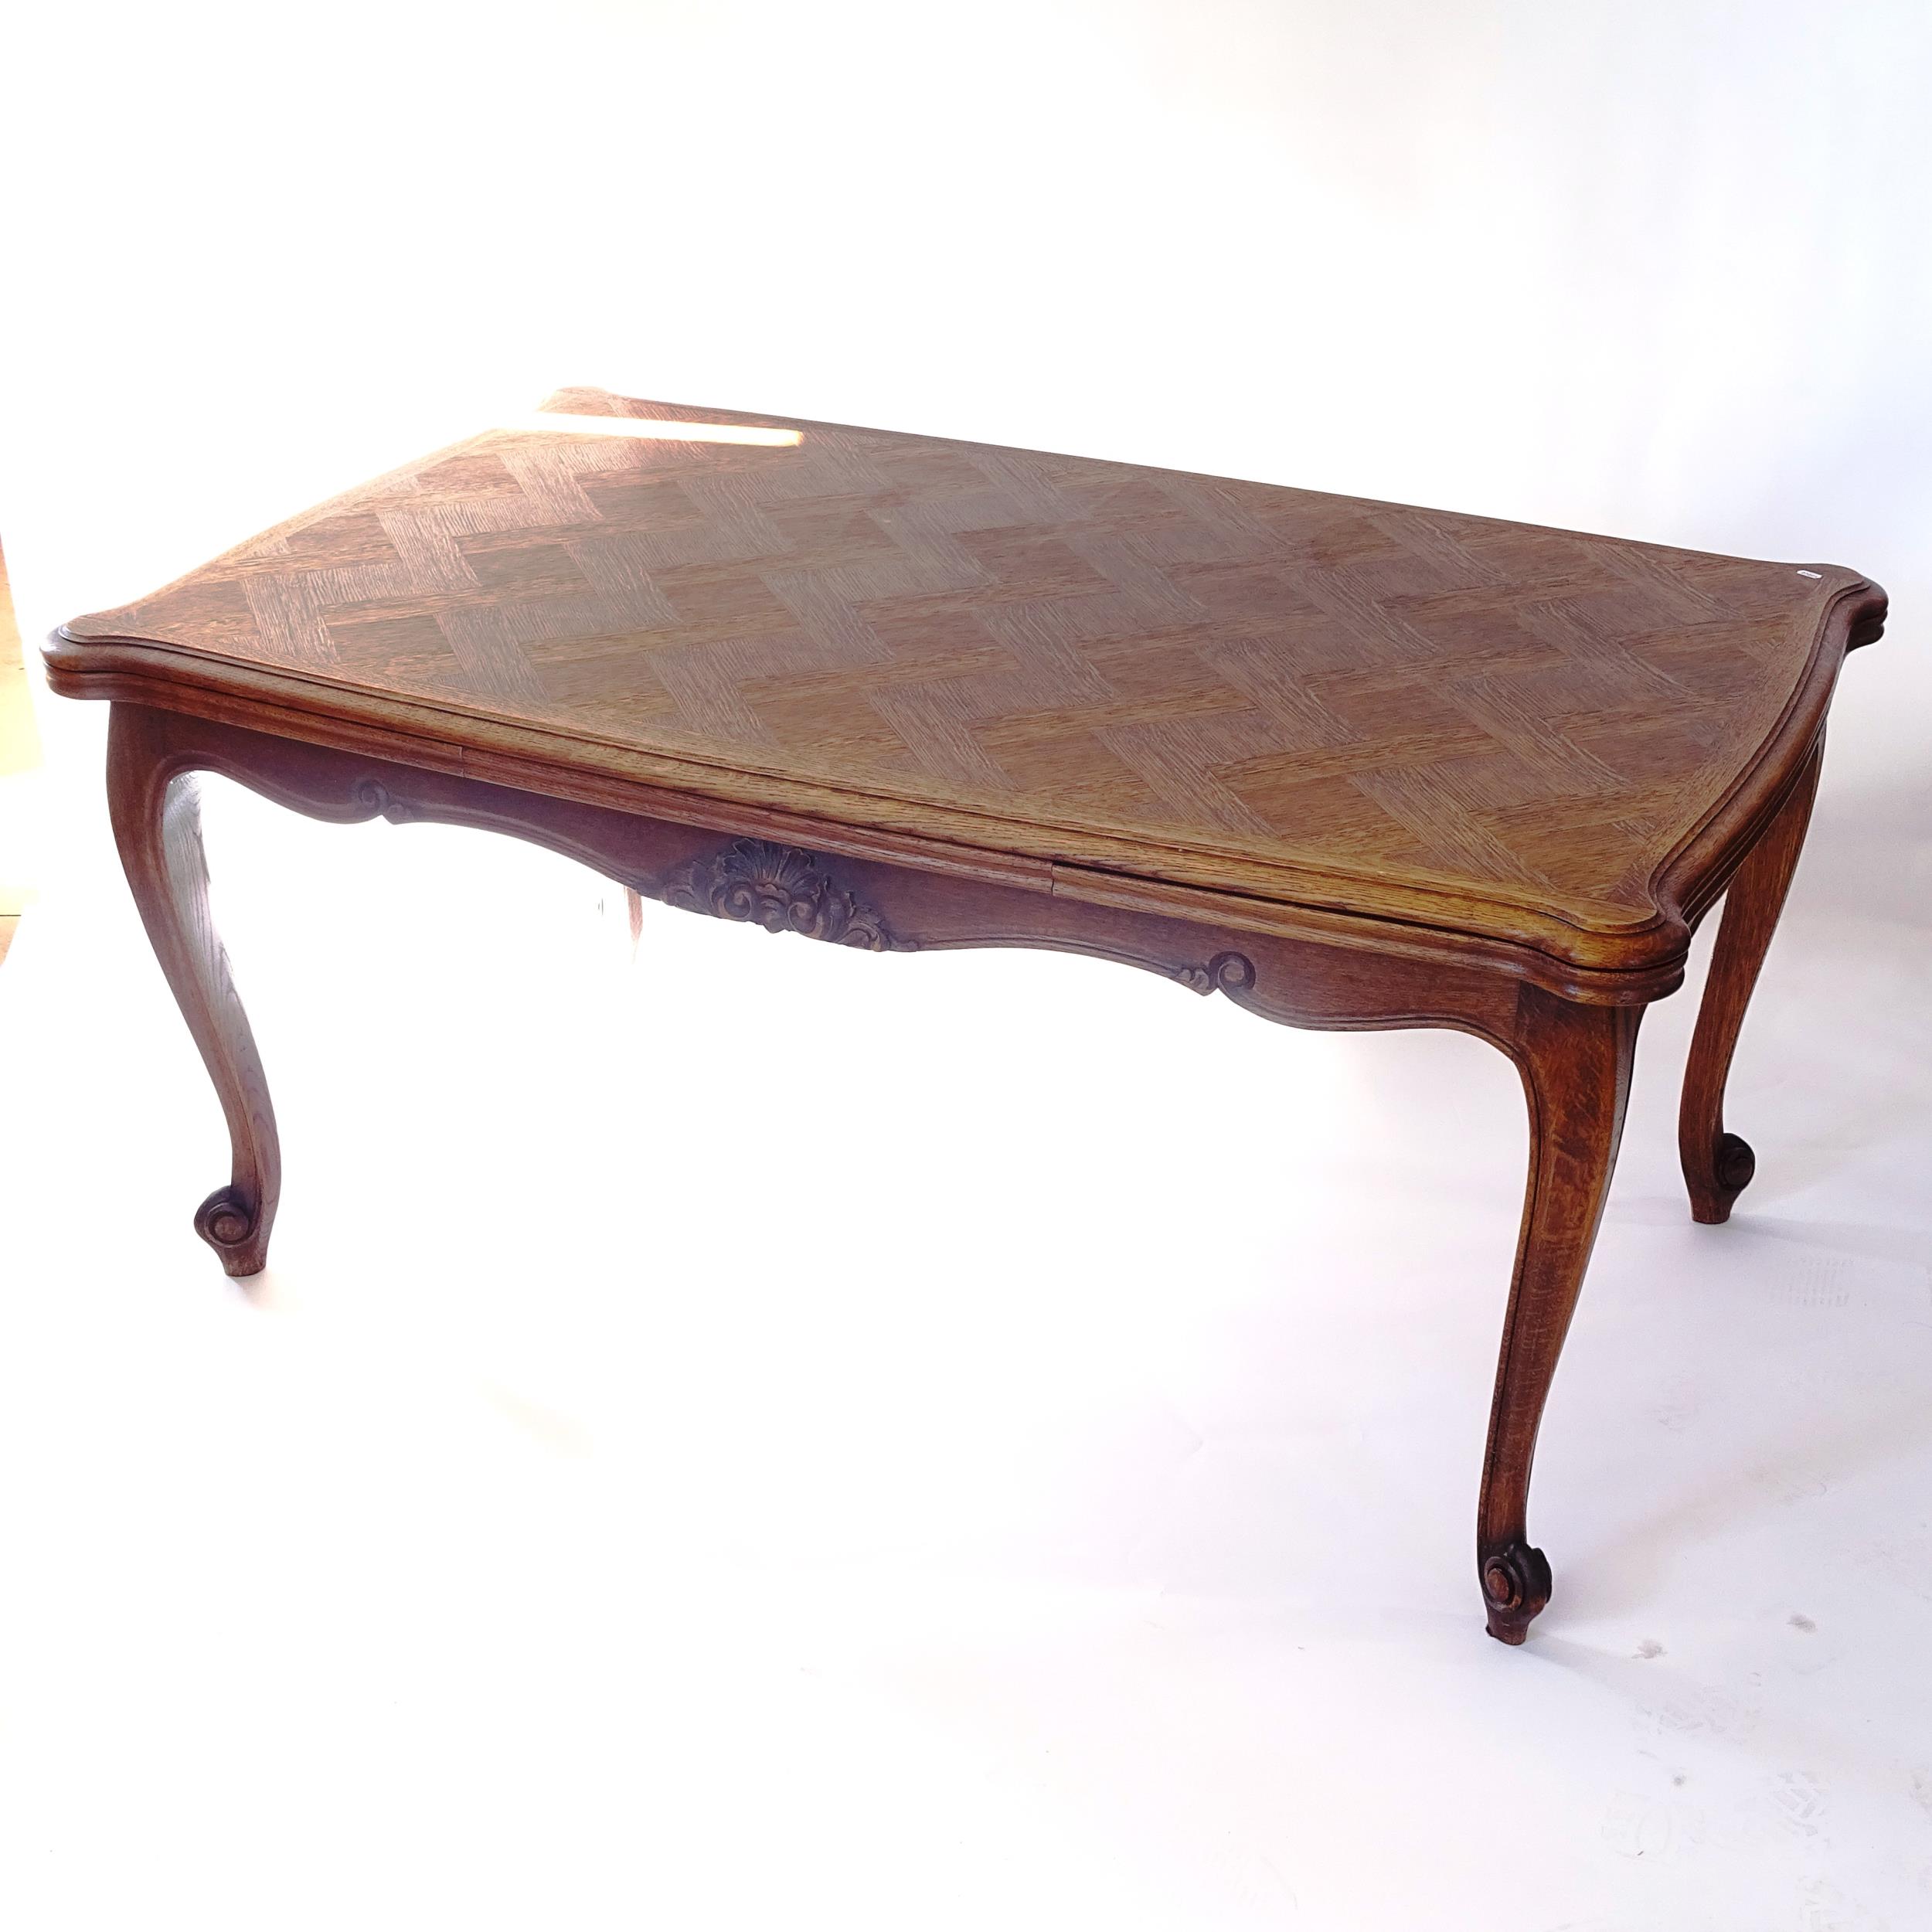 A French oak parquetry-top draw leaf table, L160cm extending to 260cm, H75cm, D97cm